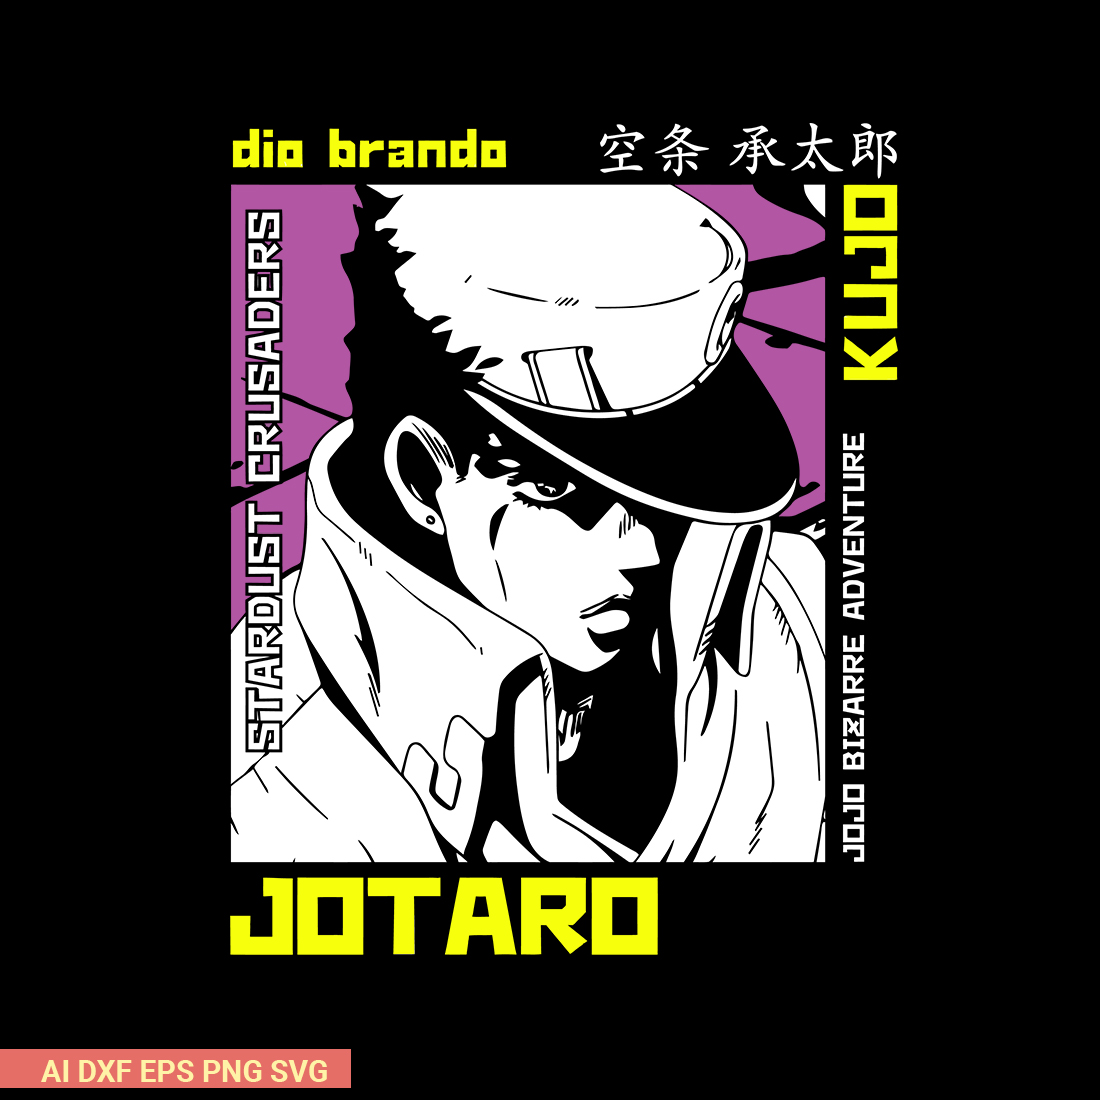 Jotaro poster Embroidery Design, Jojo Embroidery, Embroidery File, Anime Embroidery, Anime shirt, Digital download cover image.